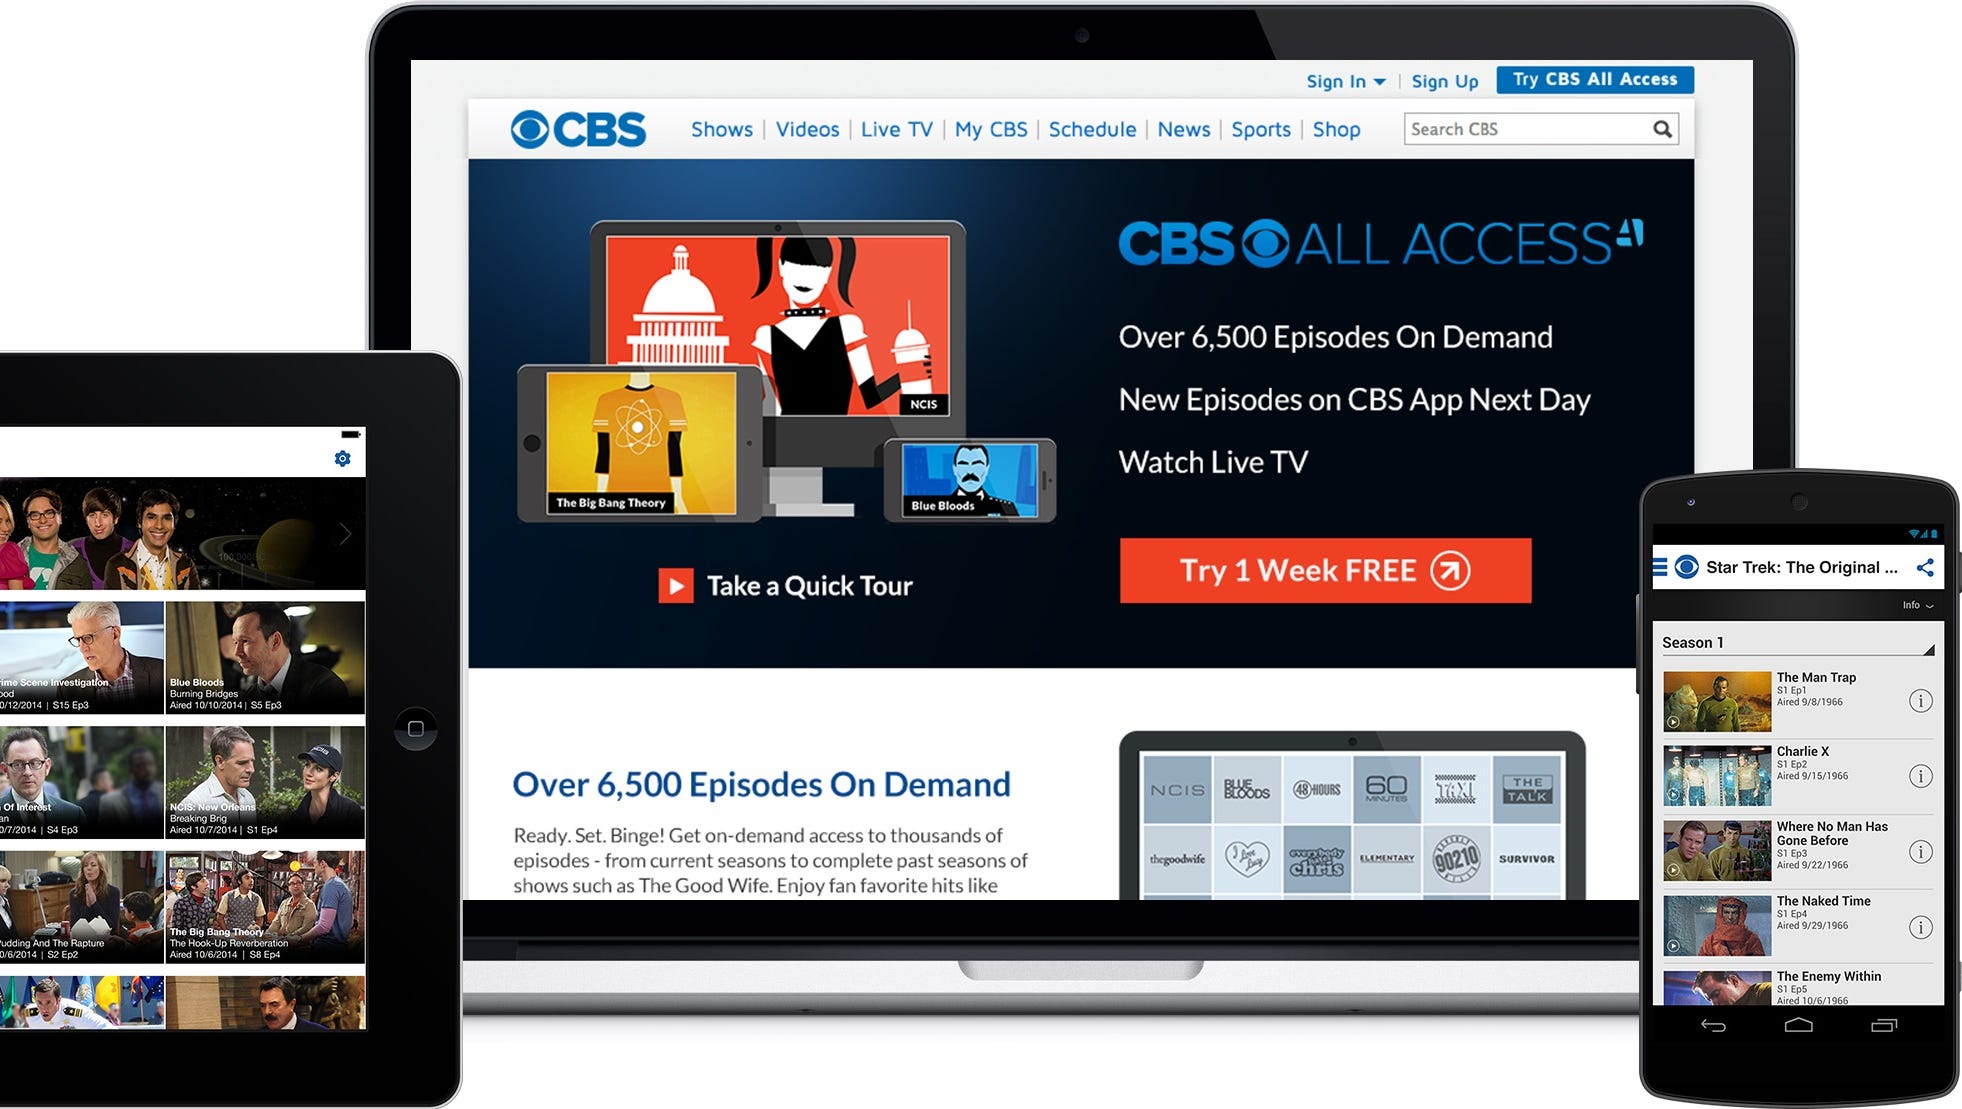 Access over. CBS app.